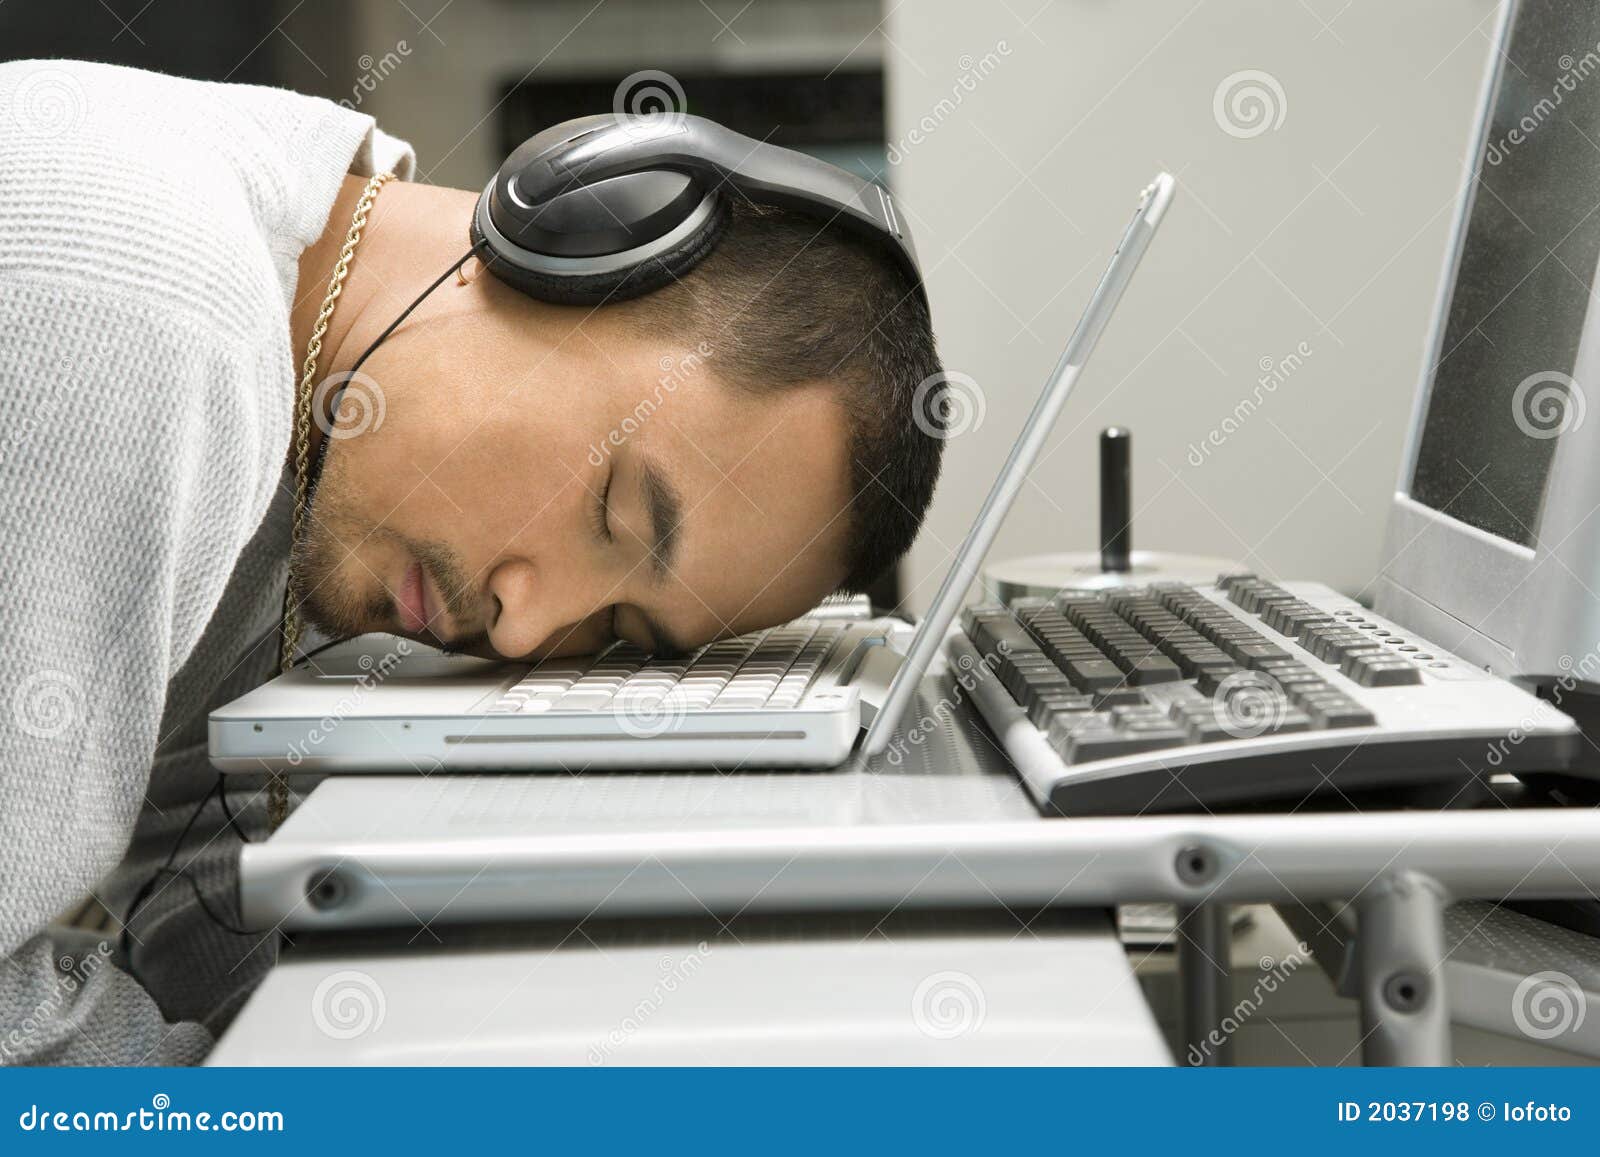 Man With Headphones Sleeping On Laptop. Stock Photo